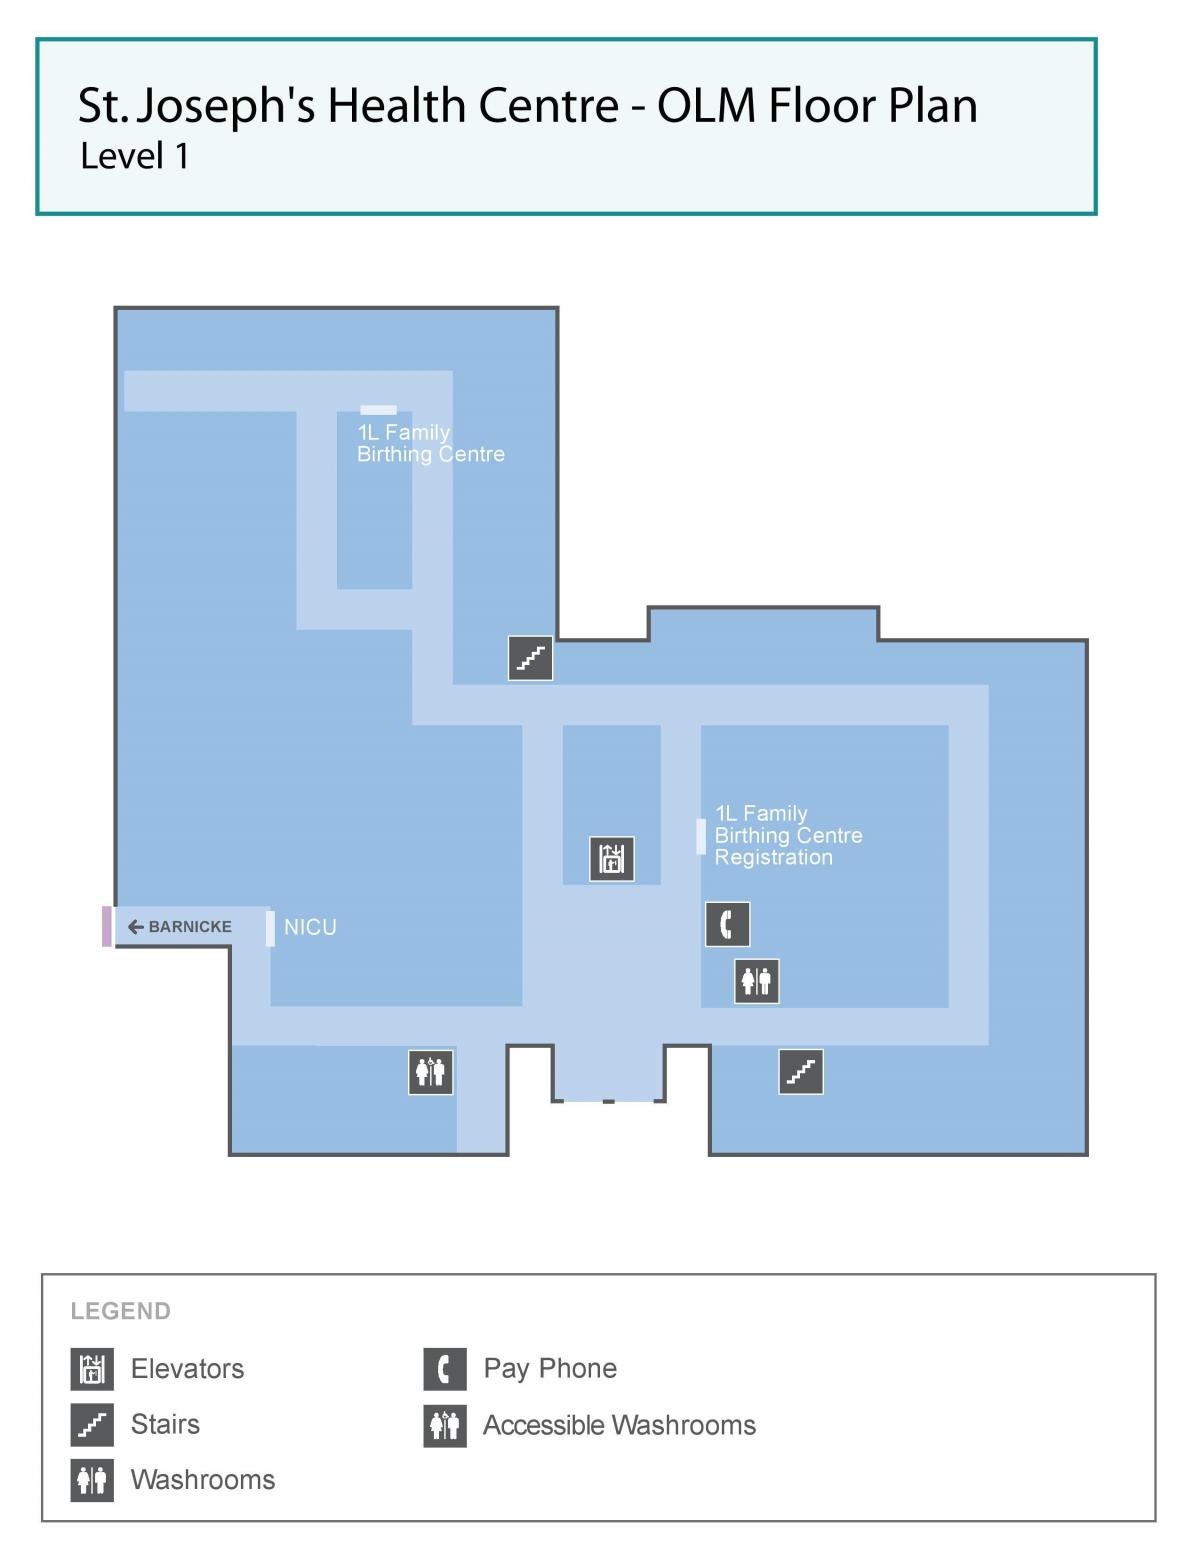 Karte von St. Joseph ' s Health centre, Toronto OLM level 1